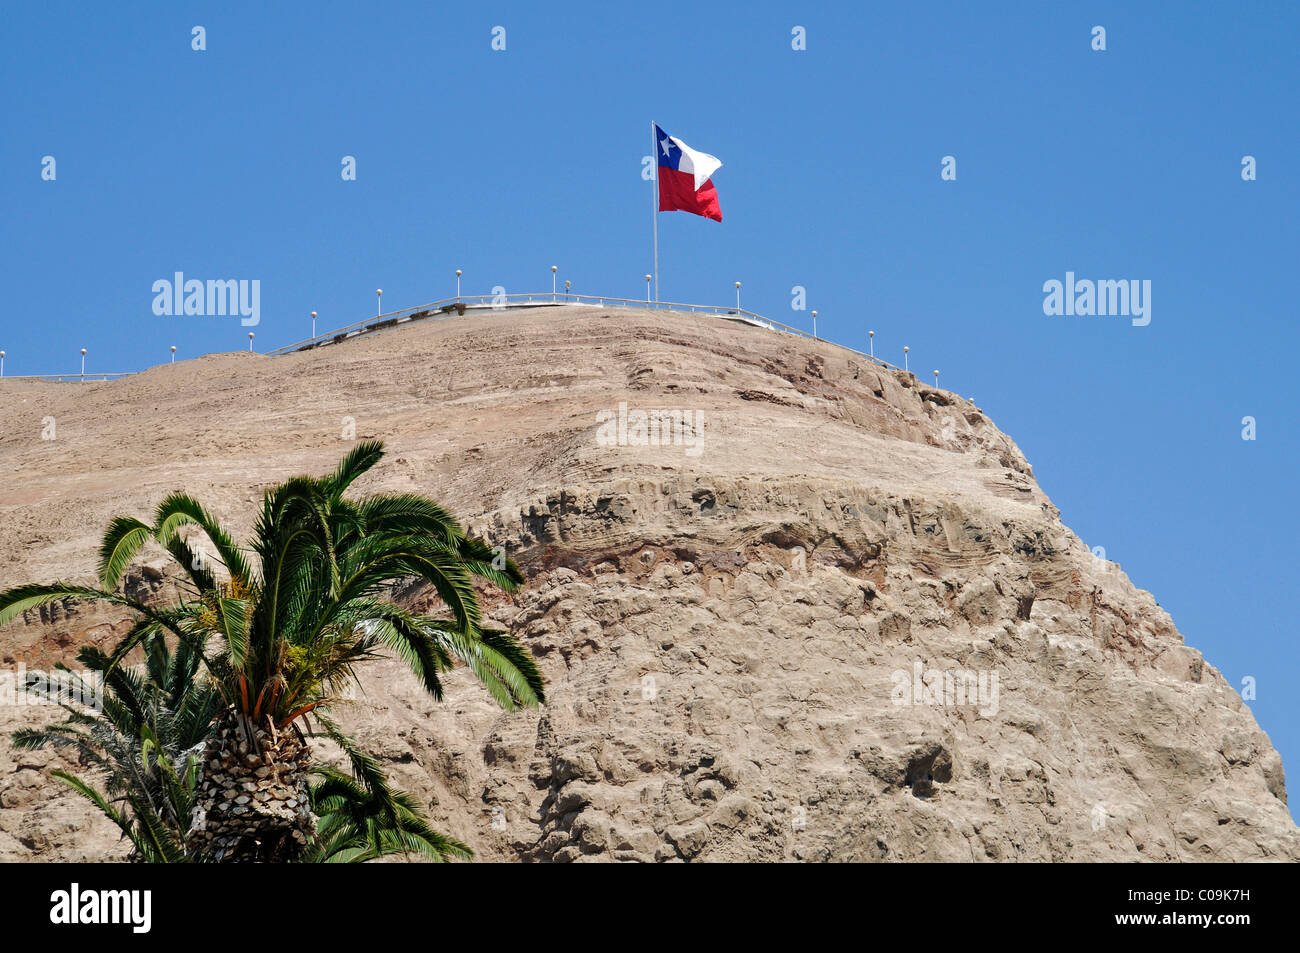 Chilean flag, El Morro, mountain, landmark, theater of war, War of the Pacific, Arica, Norte Grande, North Chile, Chile Stock Photo